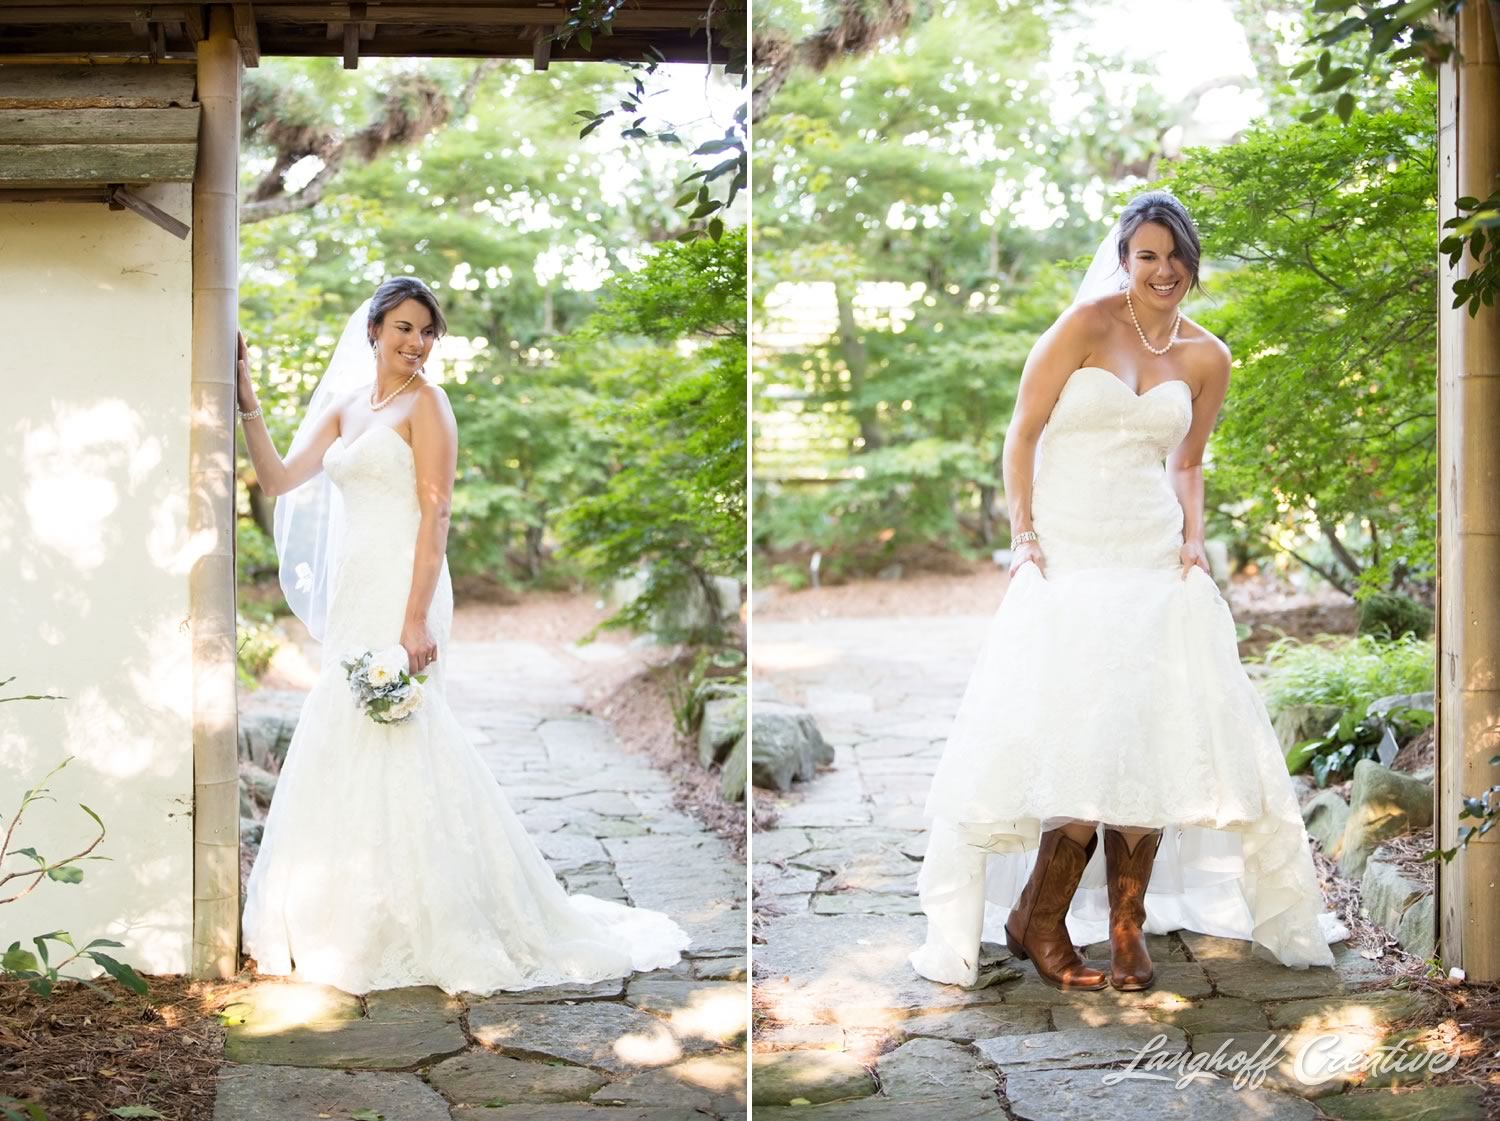 BridalSession-Bridals-RaleighBride-NCbride-JCRaulstonArboretum-RaleighWedding-WeddingPhotographer-LanghoffCreative-Amy2015-Bride-6-photo.jpg